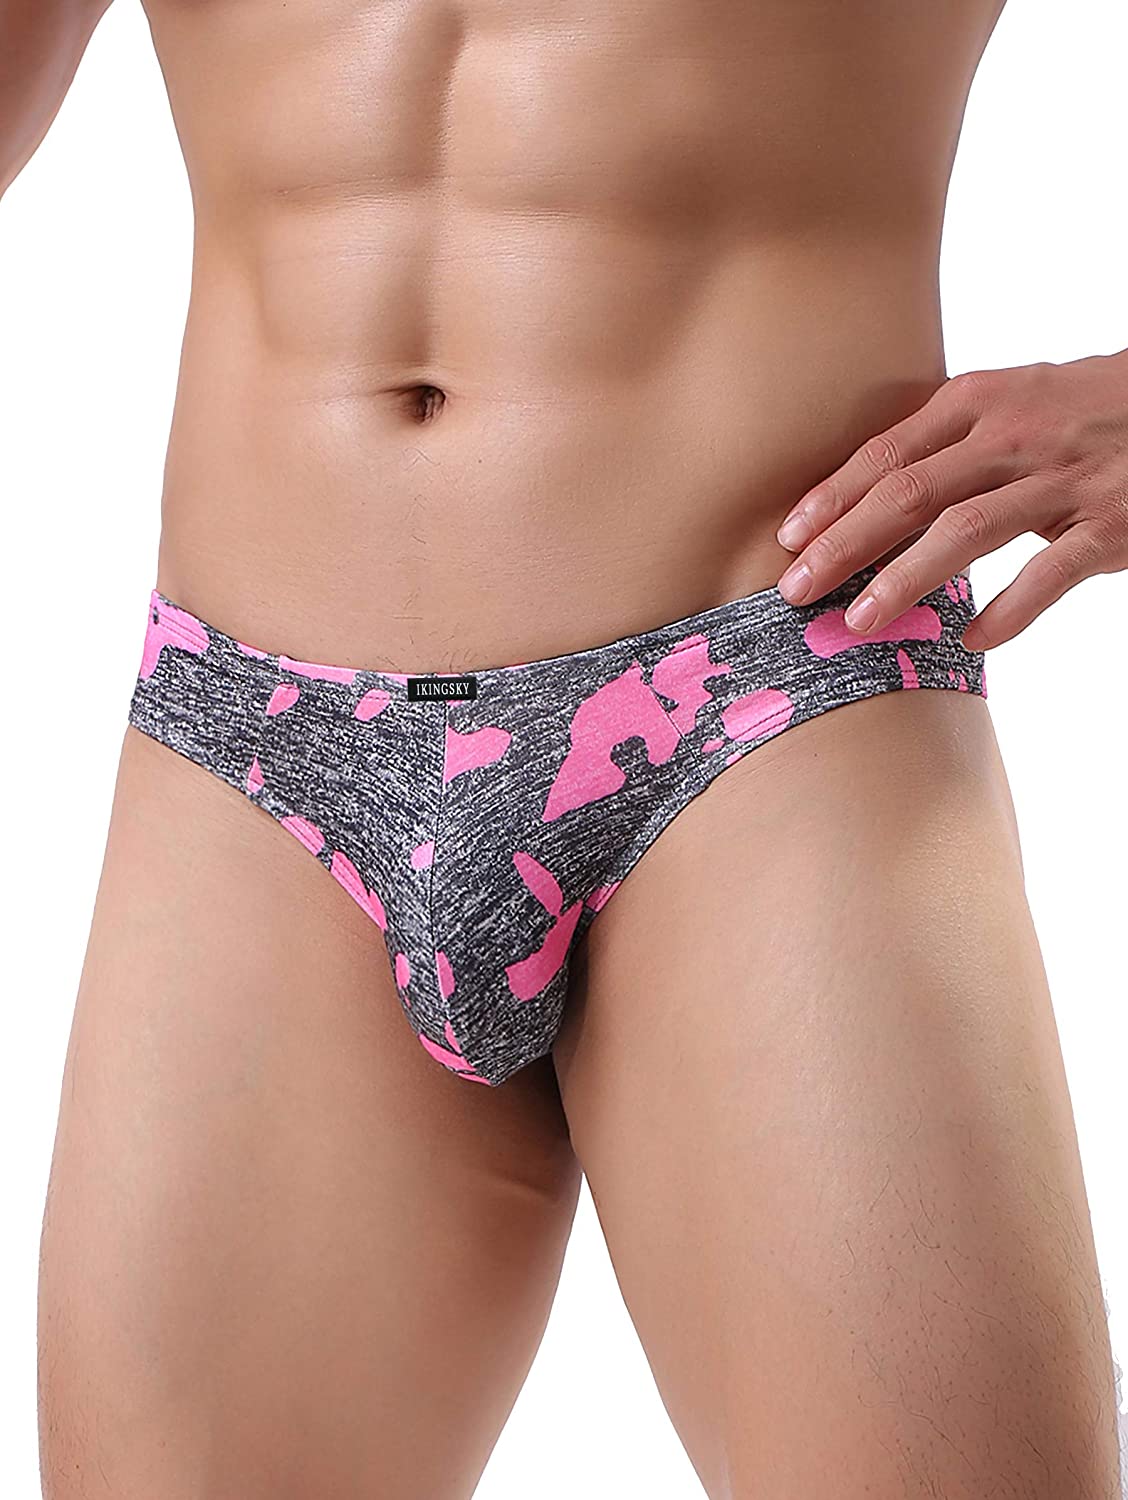 Ikingsky Mens Camouflage Thong Underwear Sexy Low Rise T Back Underwear Ebay